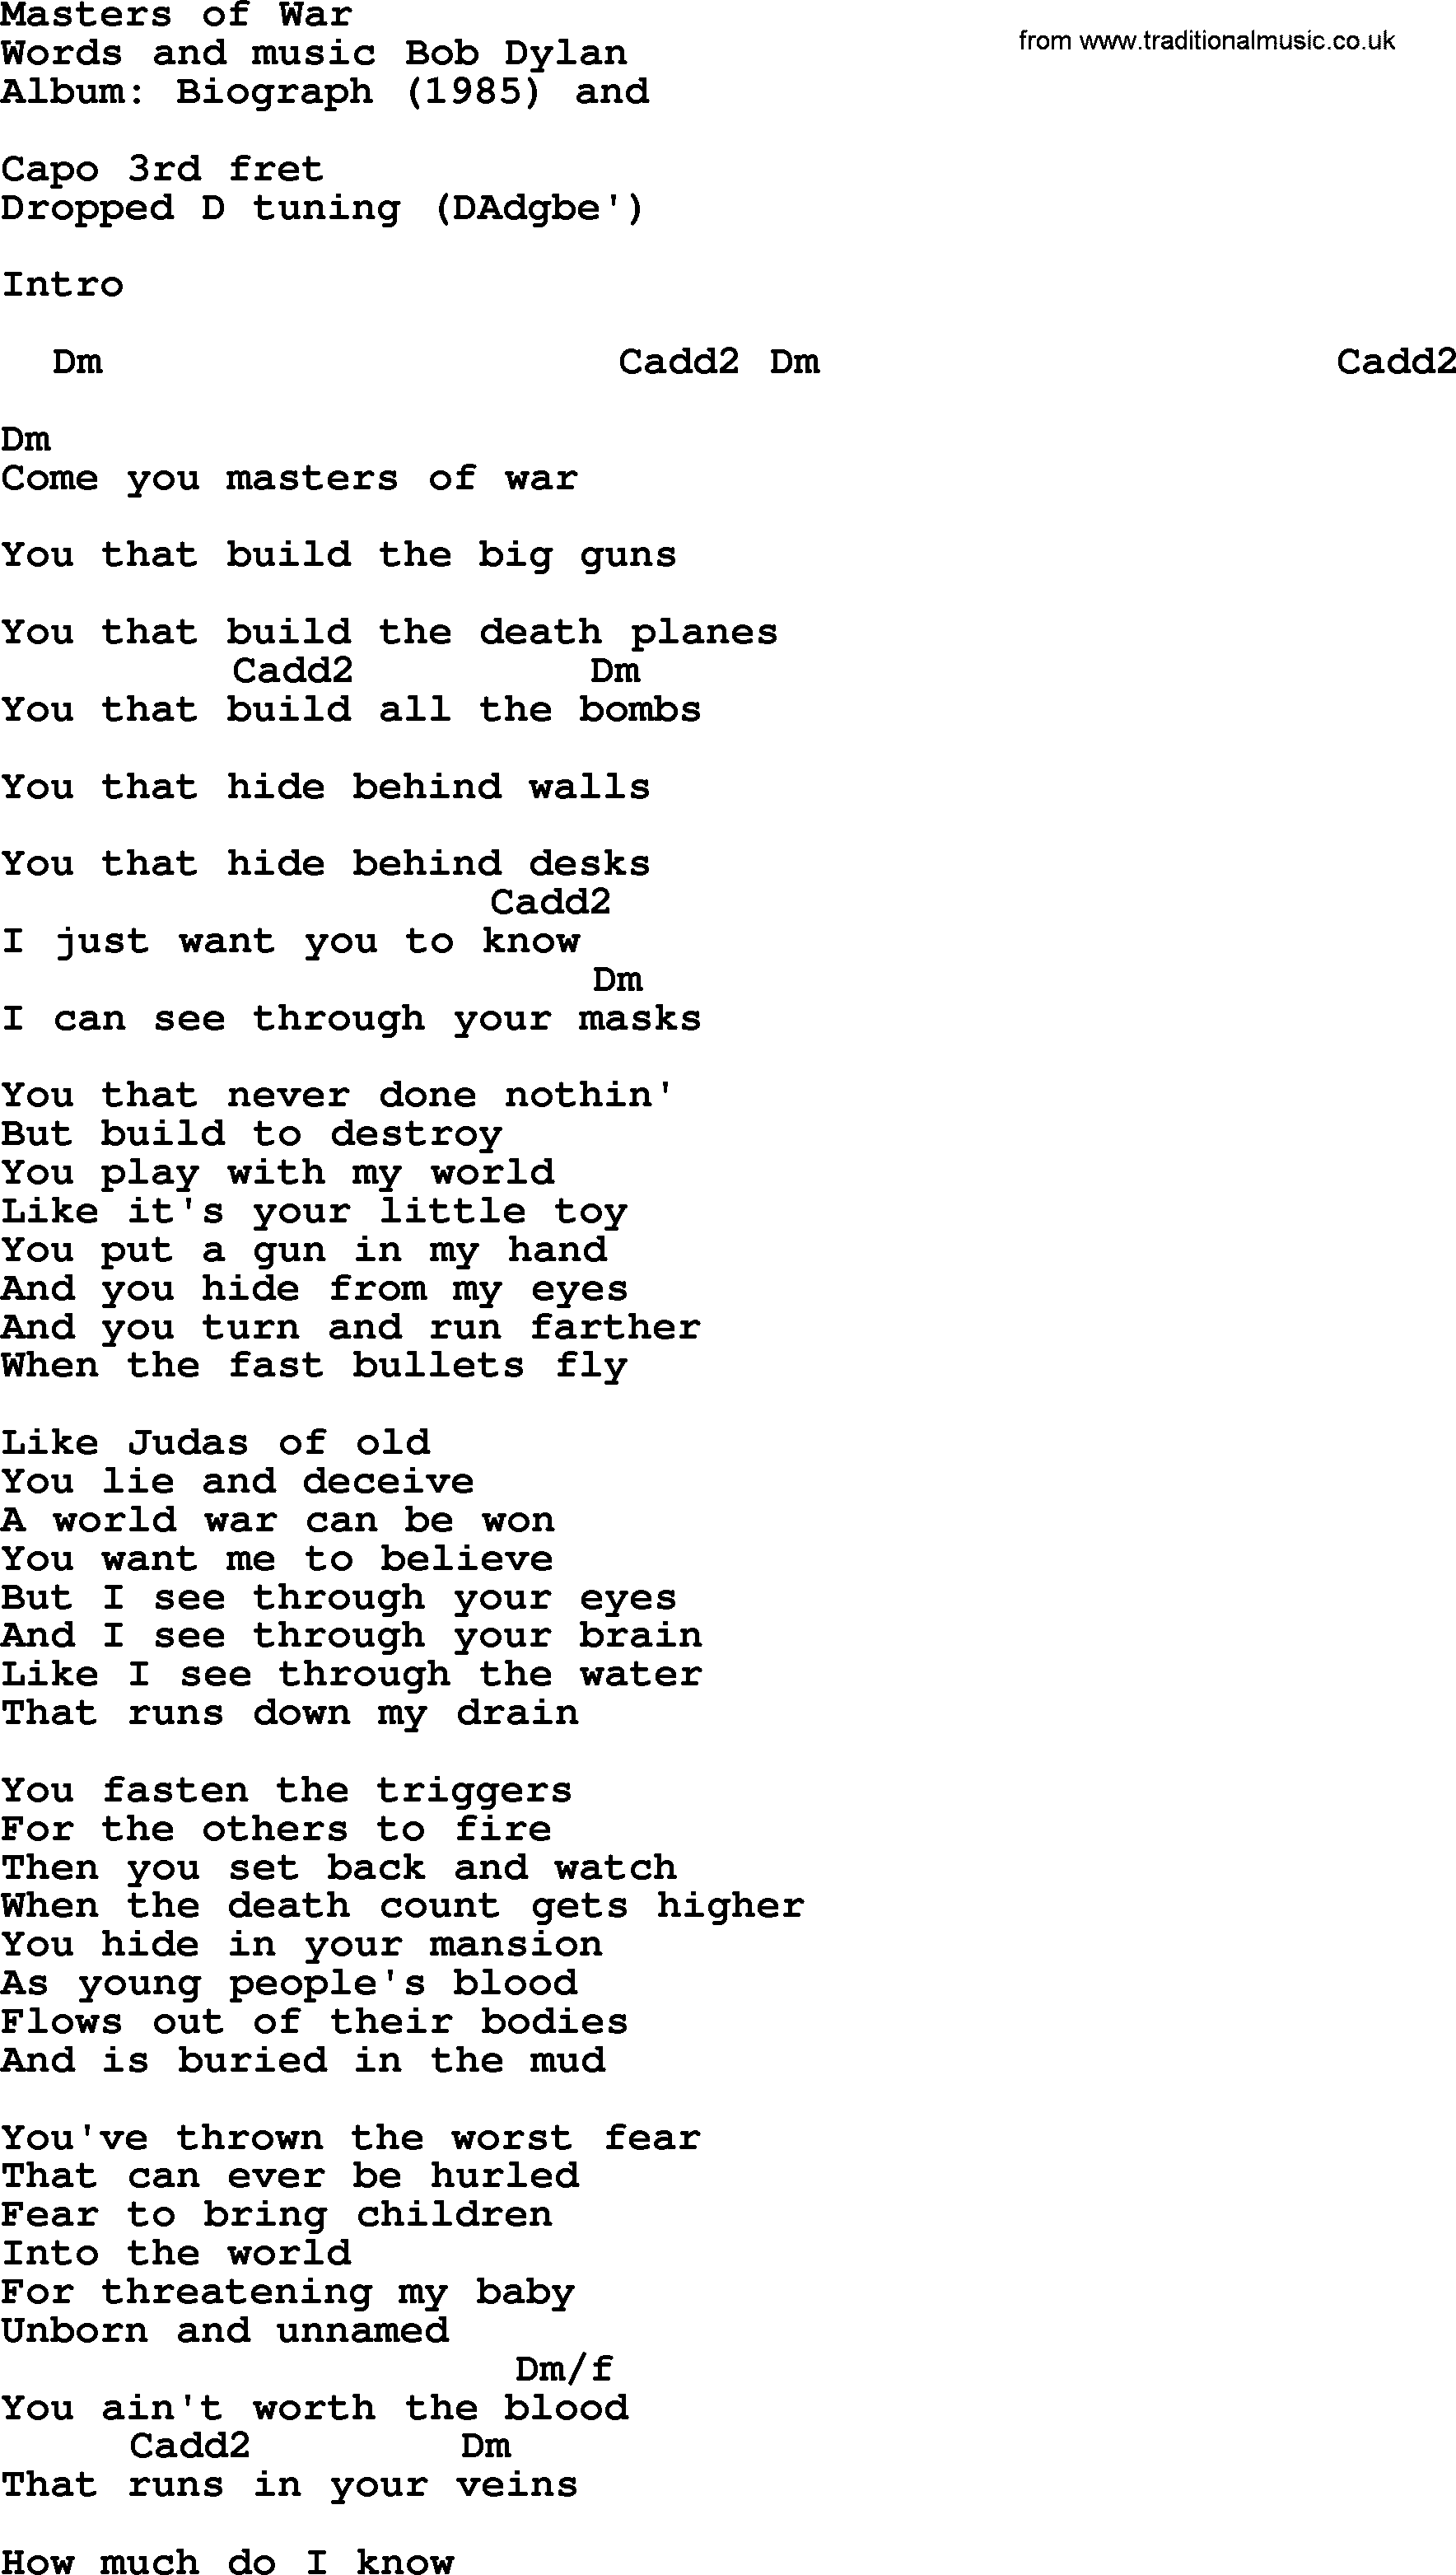 Bob Dylan song, lyrics with chords - Masters of War